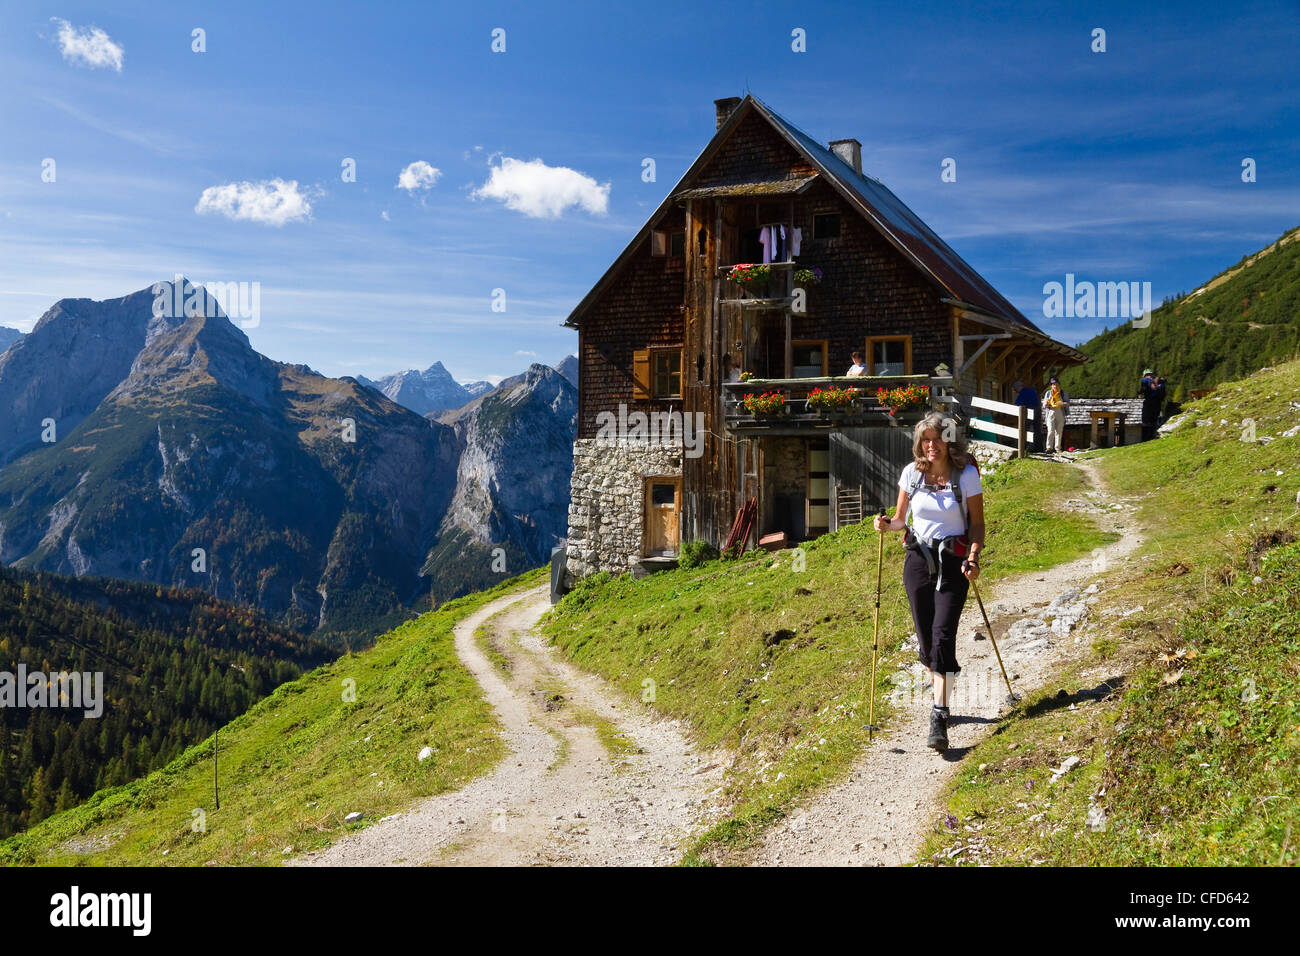 Hiker in front of mountain hut, Plumsjoch hut, Karwendel mountains, Tyrol, Austria, Europe Stock Photo